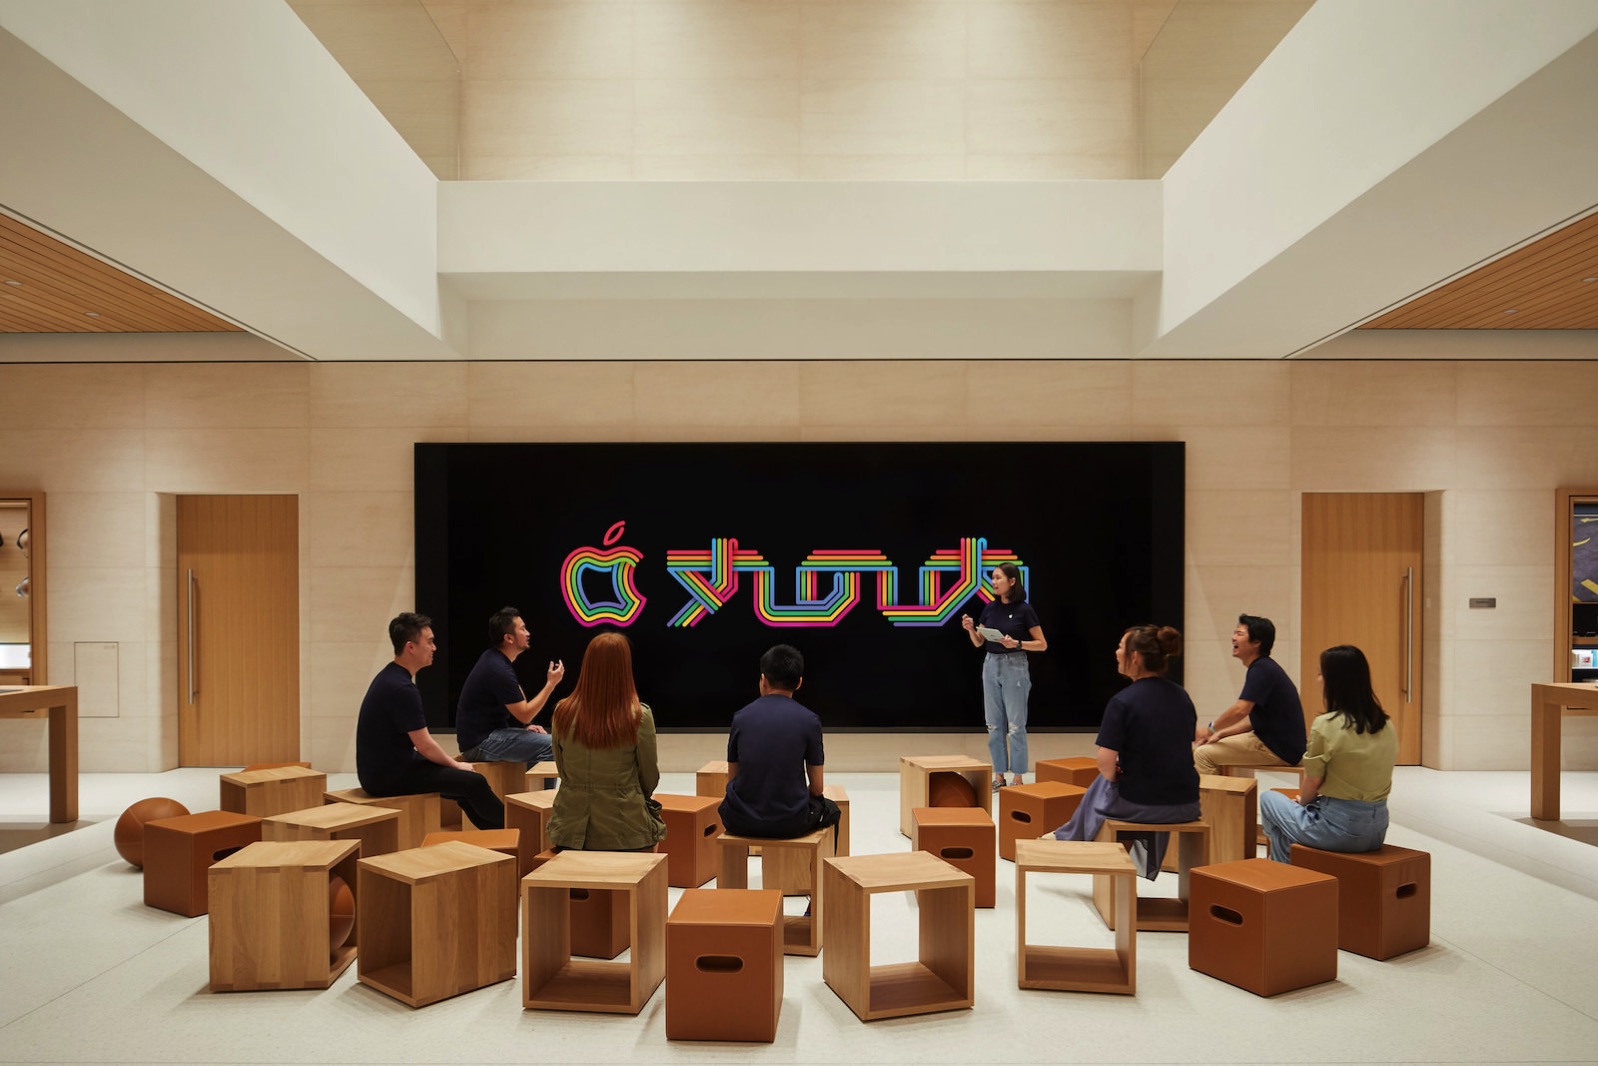 Apple-largest-store-in-Japan-opens-saturday-in-Tokyo-host-creative-guild-090419.jpg